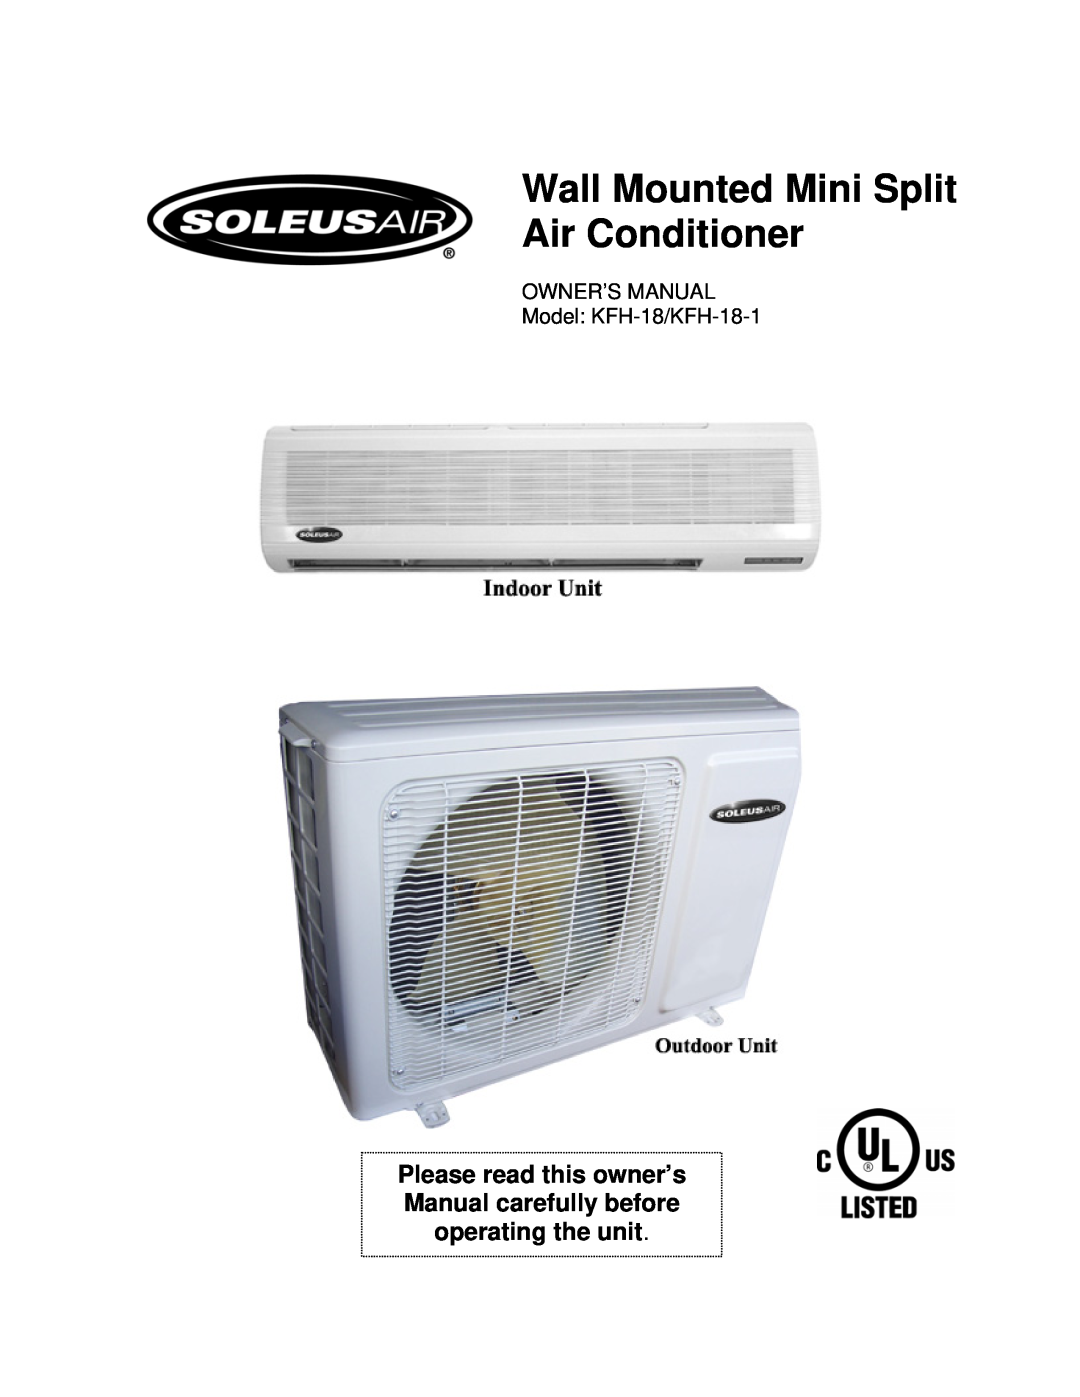 Soleus Air owner manual Wall Mounted Mini Split Air Conditioner, OWNER’S MANUAL Model: KFH-18/KFH-18-1 